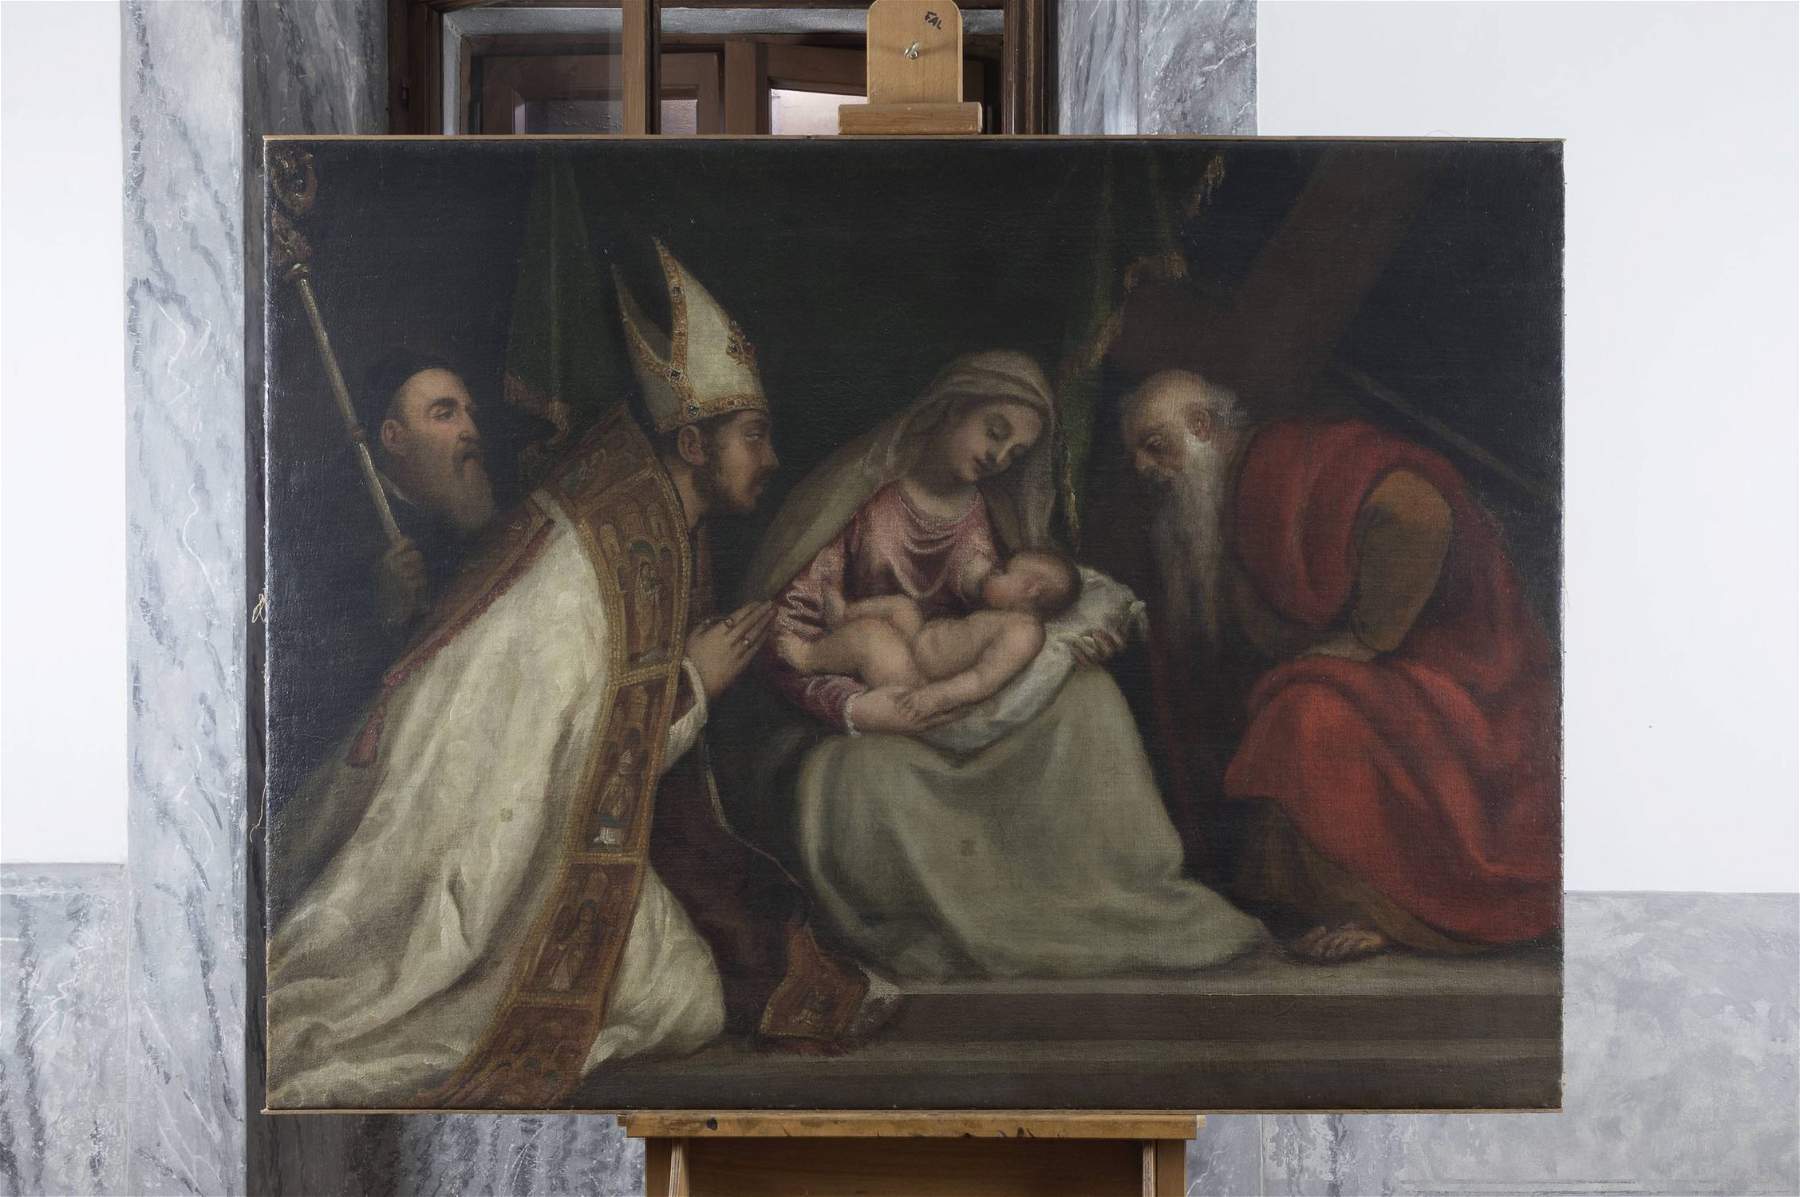 Le retable que Titien a peint pour sa Pieve di Cadore sera restauré